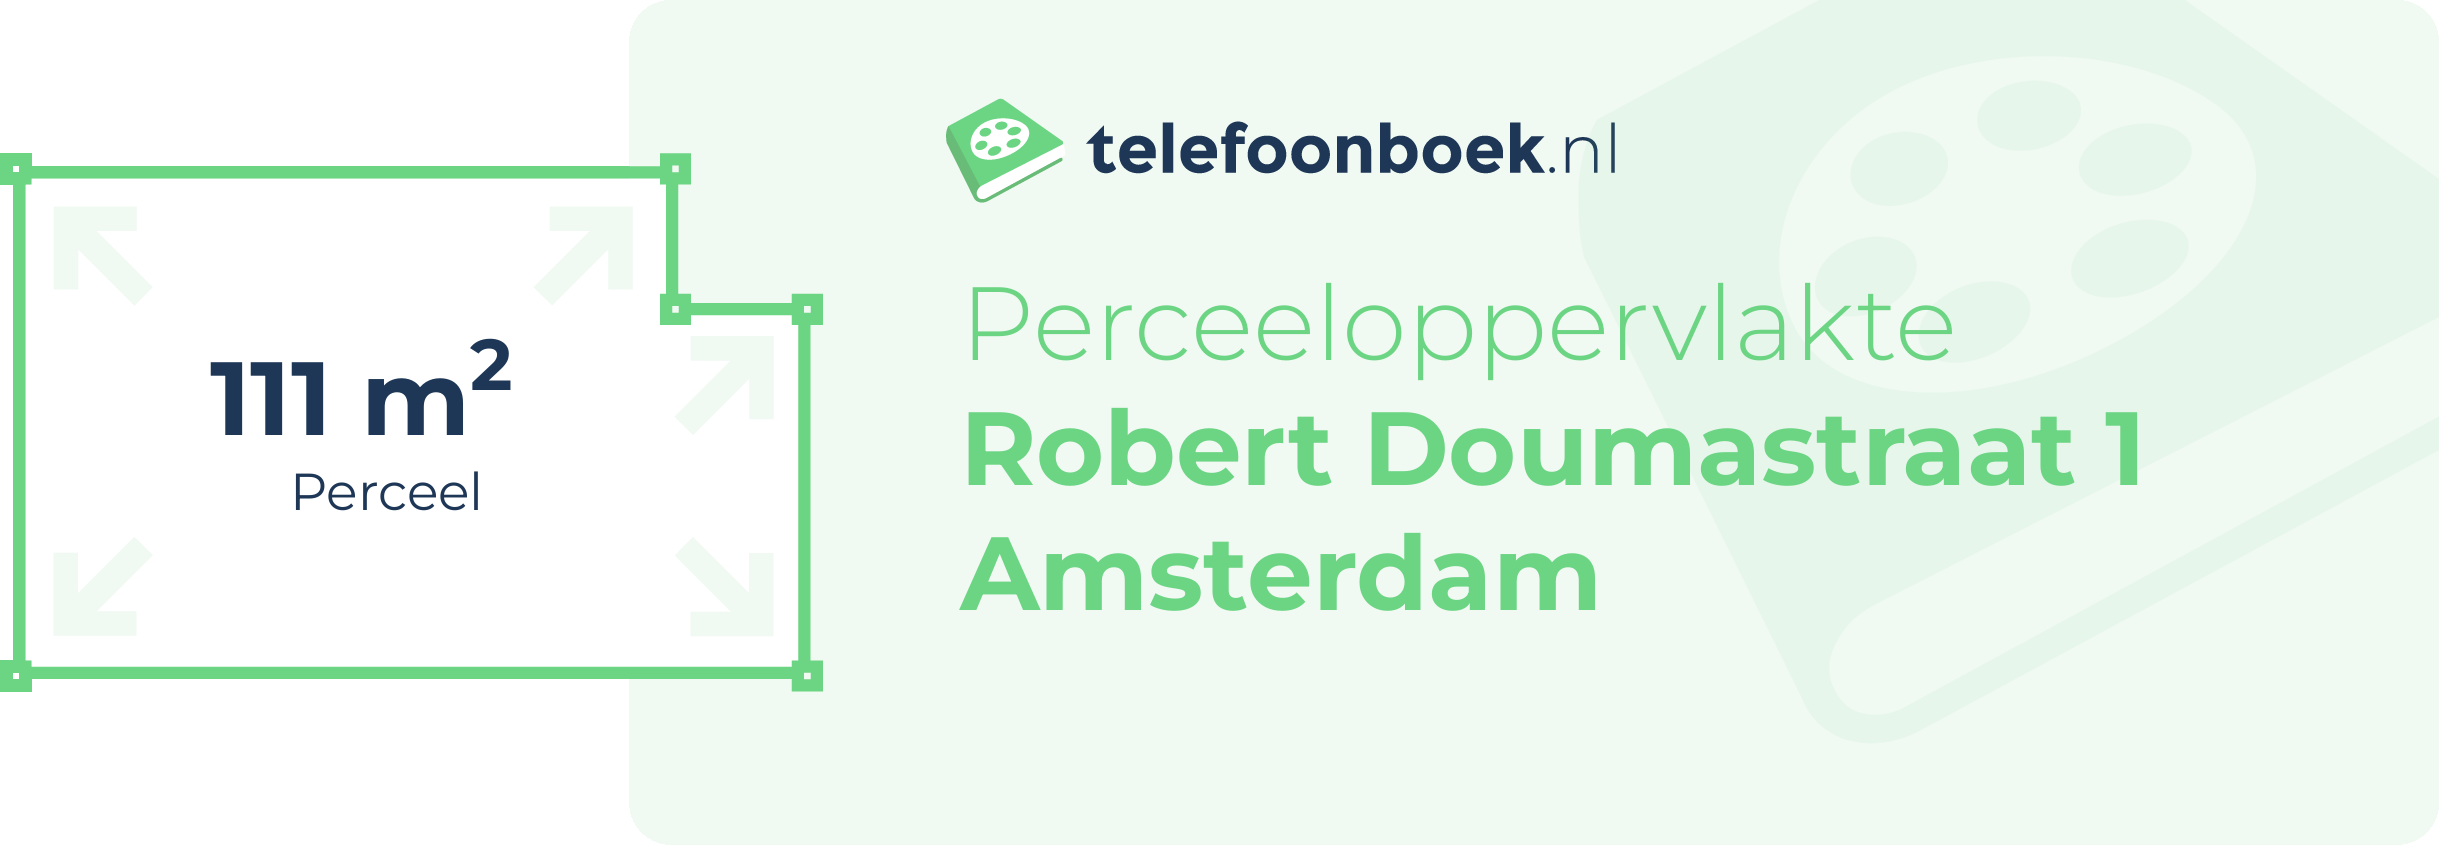 Perceeloppervlakte Robert Doumastraat 1 Amsterdam